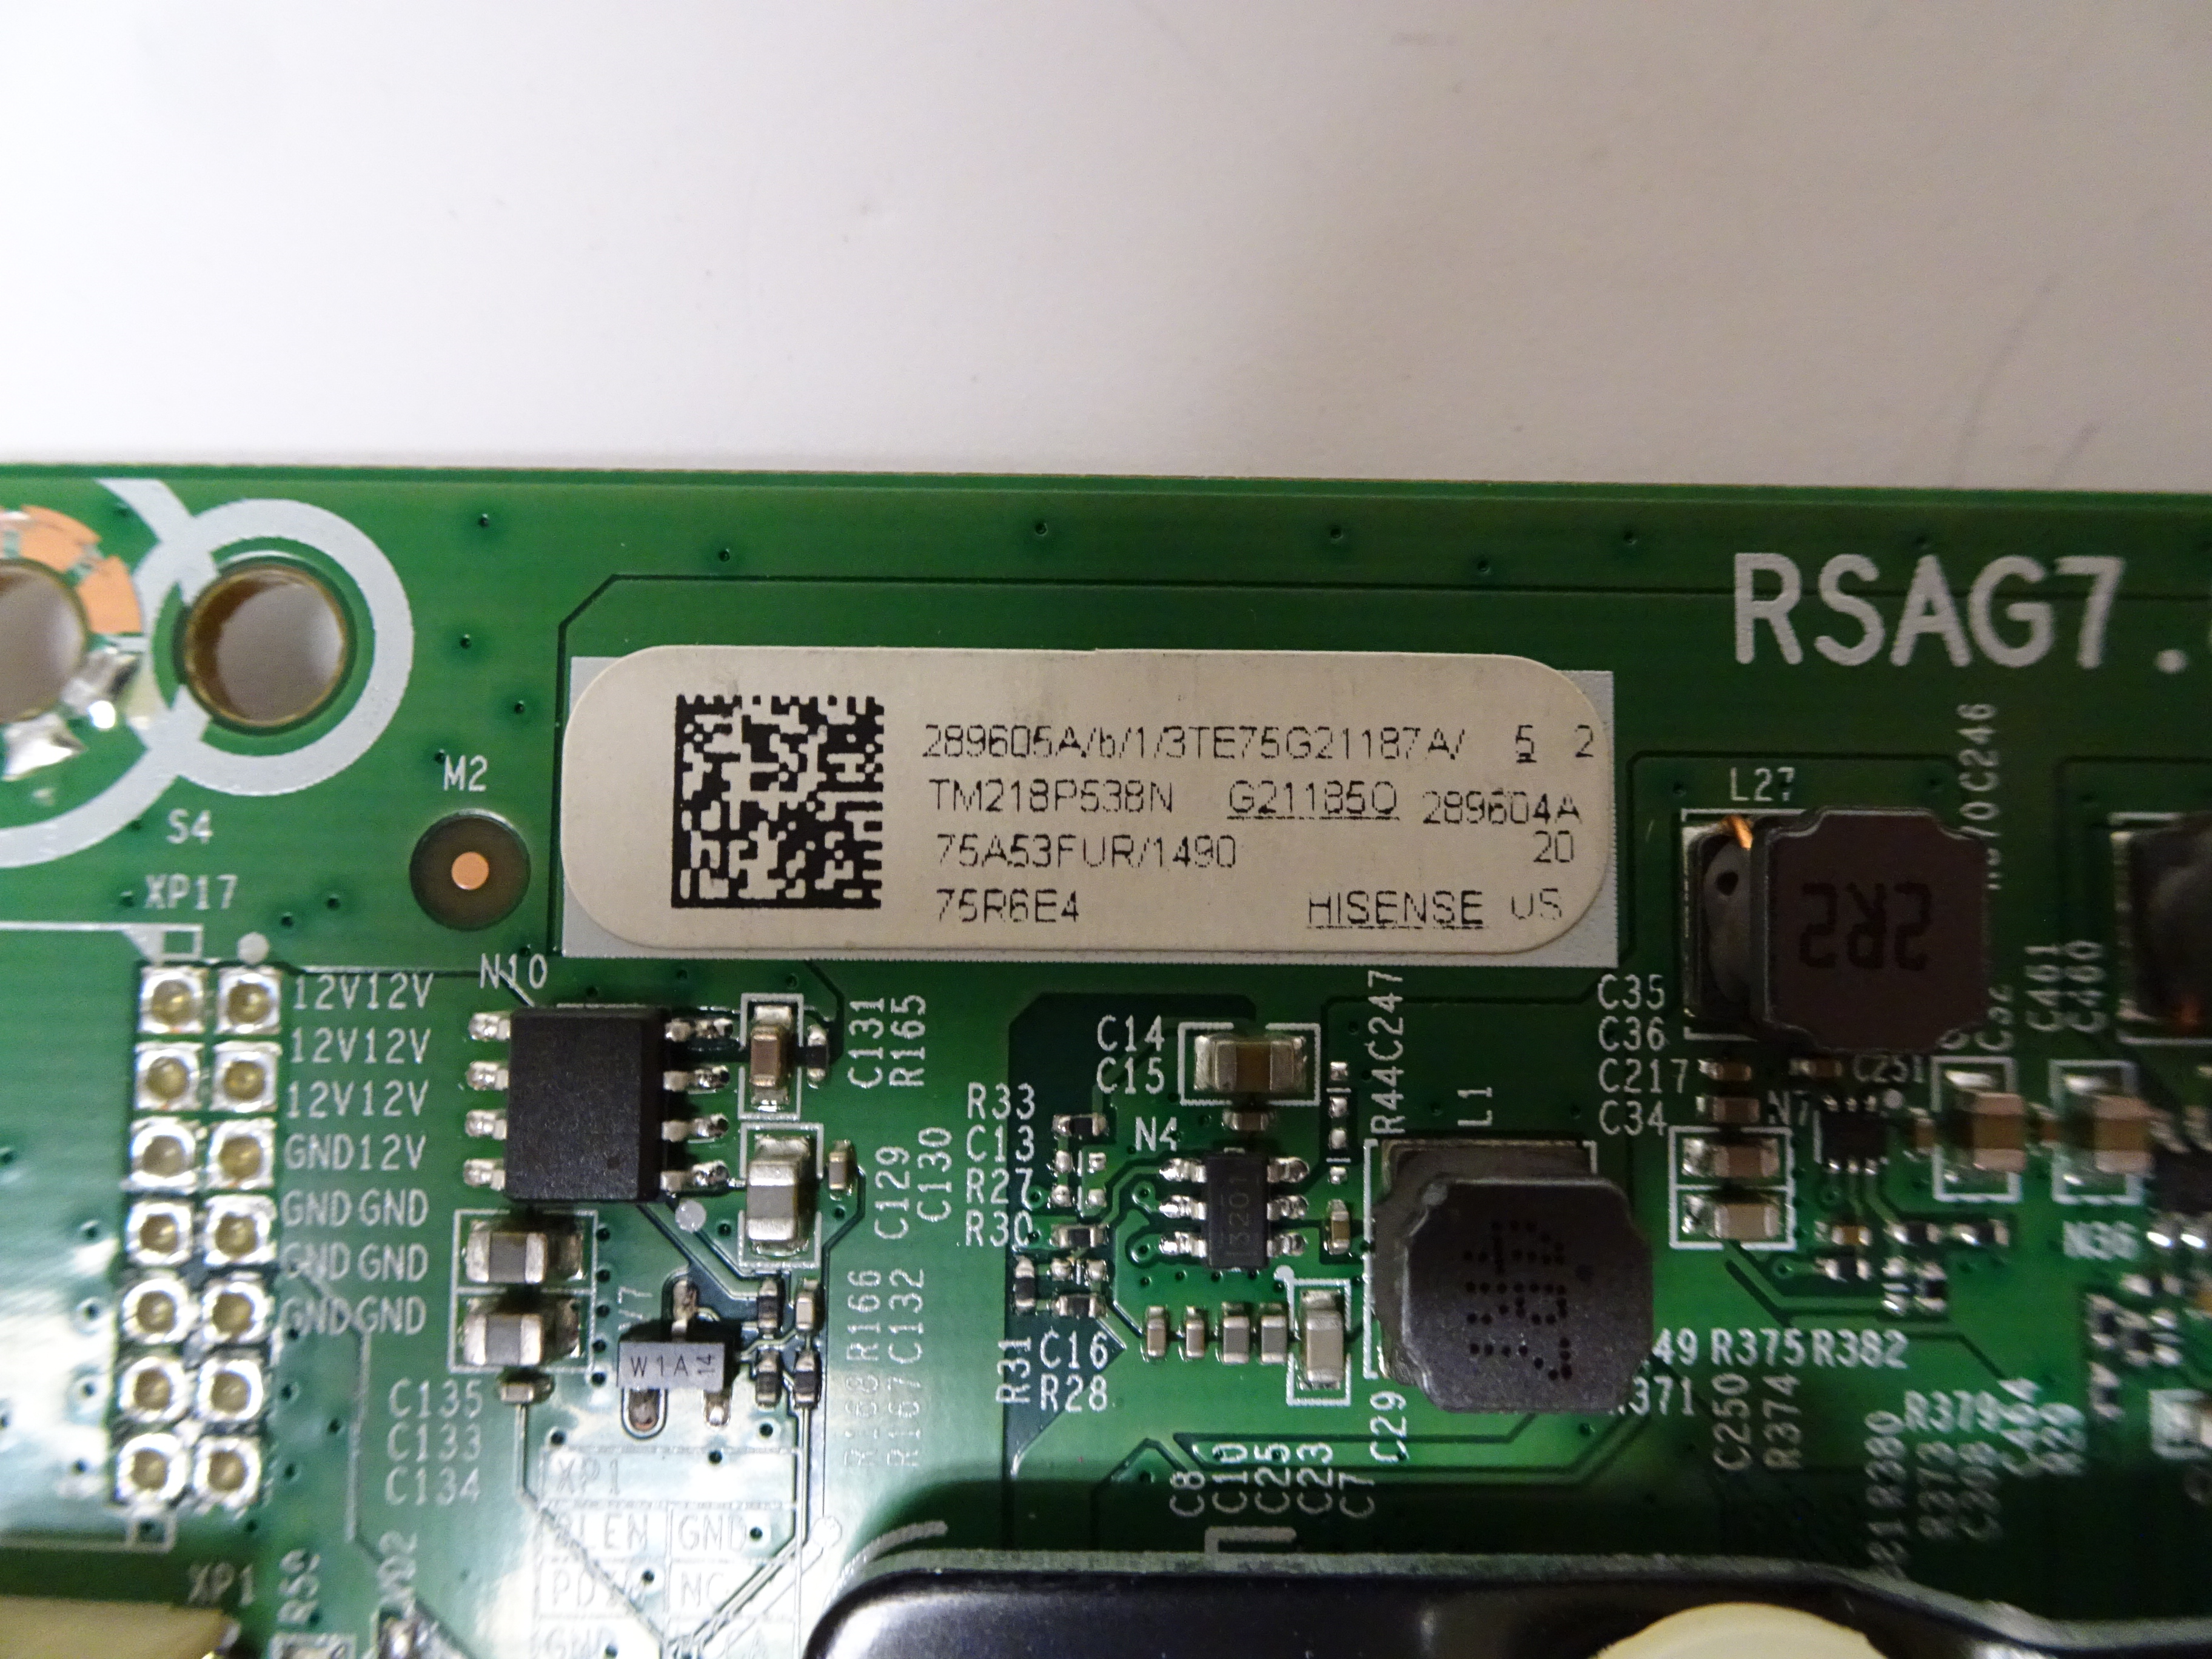 Hisense 75R6E4 Main Board 289605A, RSAG7.820.11135/ROH - image 2 of 2